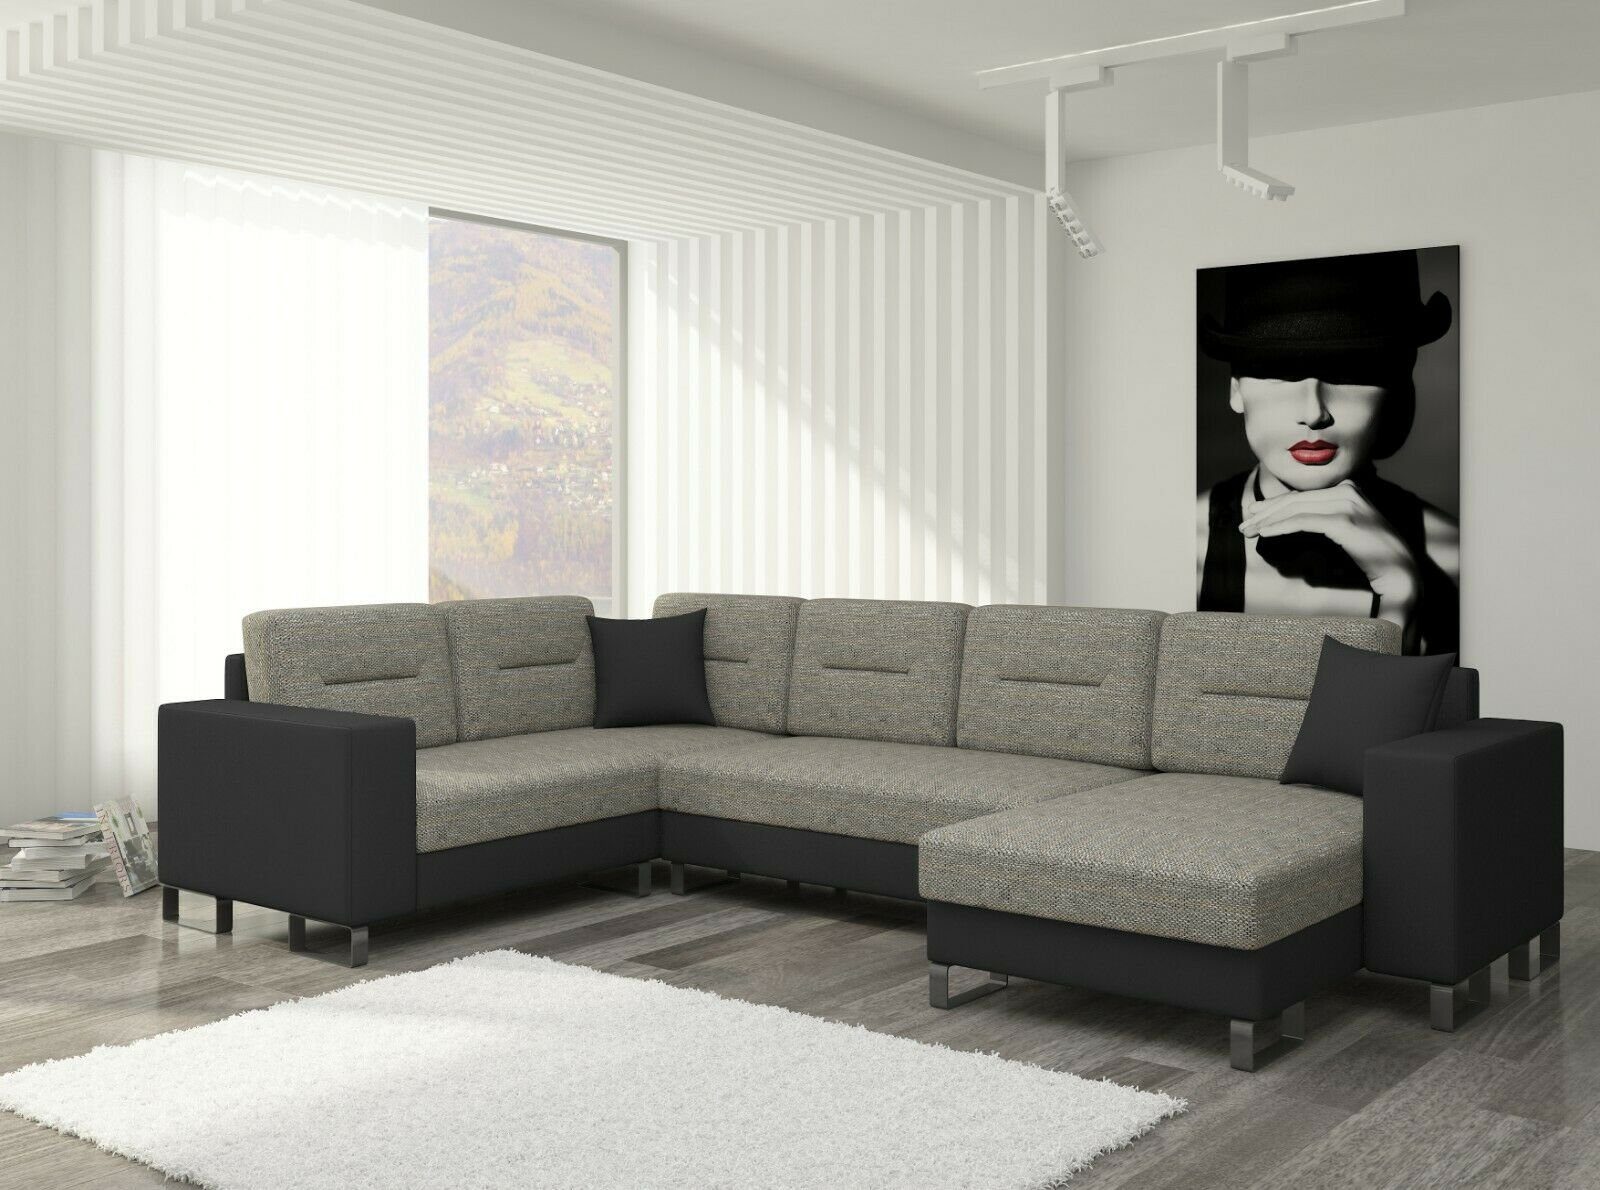 Ecksofa Polster Schlafsofa Bettfunktion Couch Bettfunktion Hellgrau/Dunkelgrau Textil, Design Mit Leder JVmoebel Ecksofa